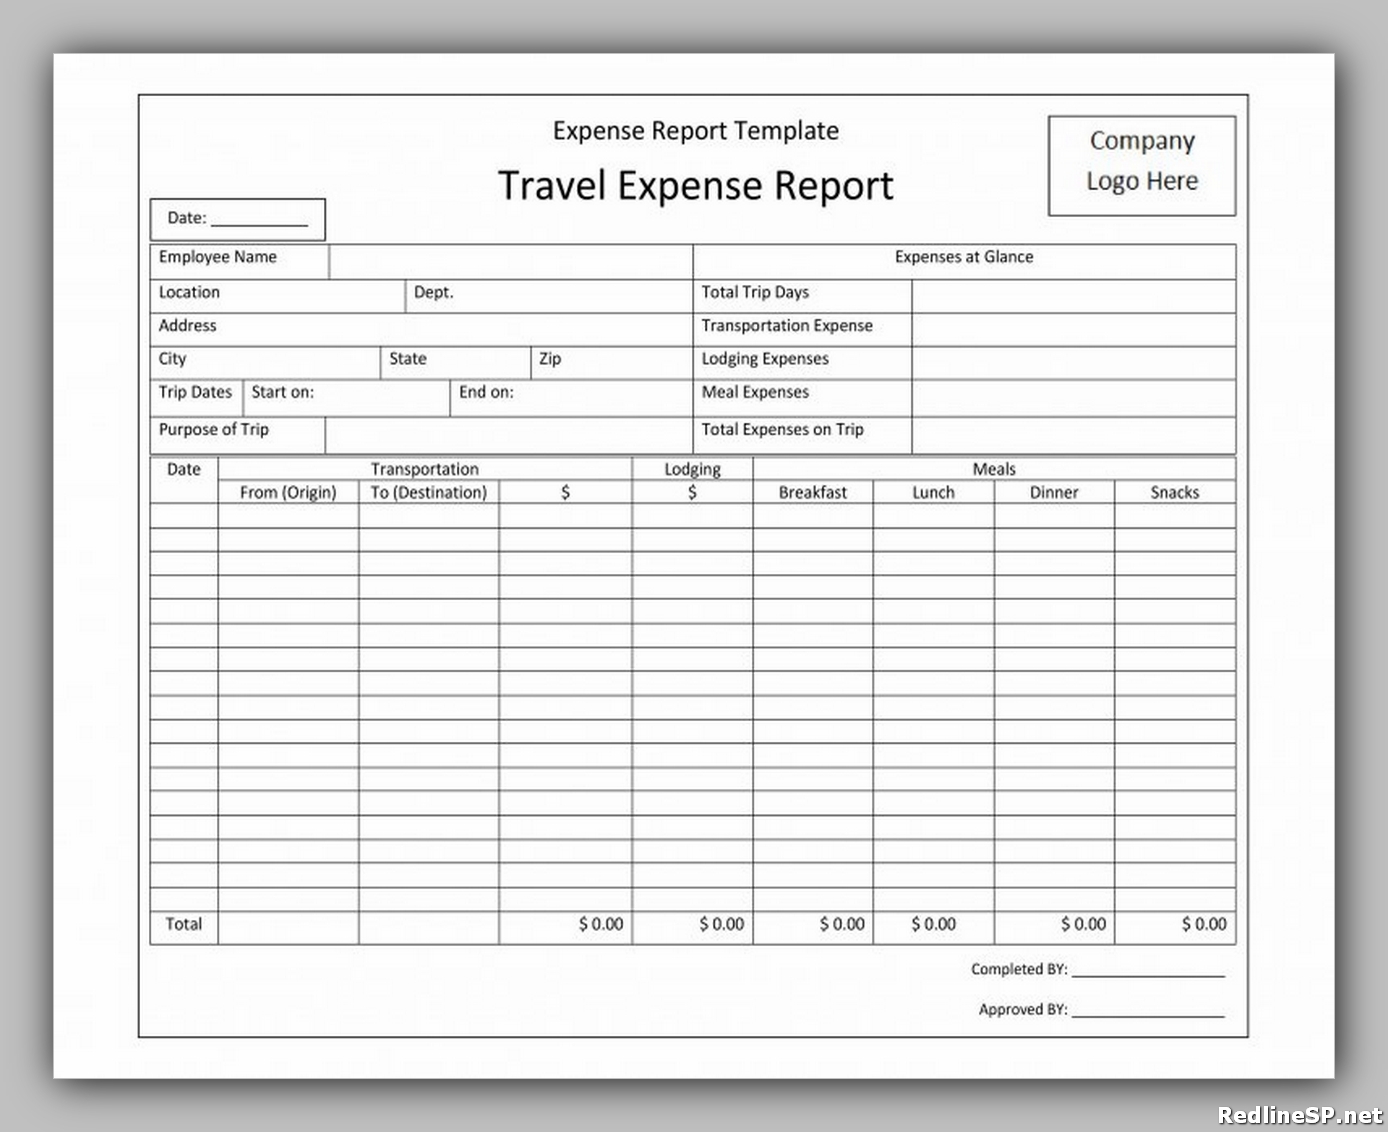 10 Amazing Travel Expense Report RedlineSP